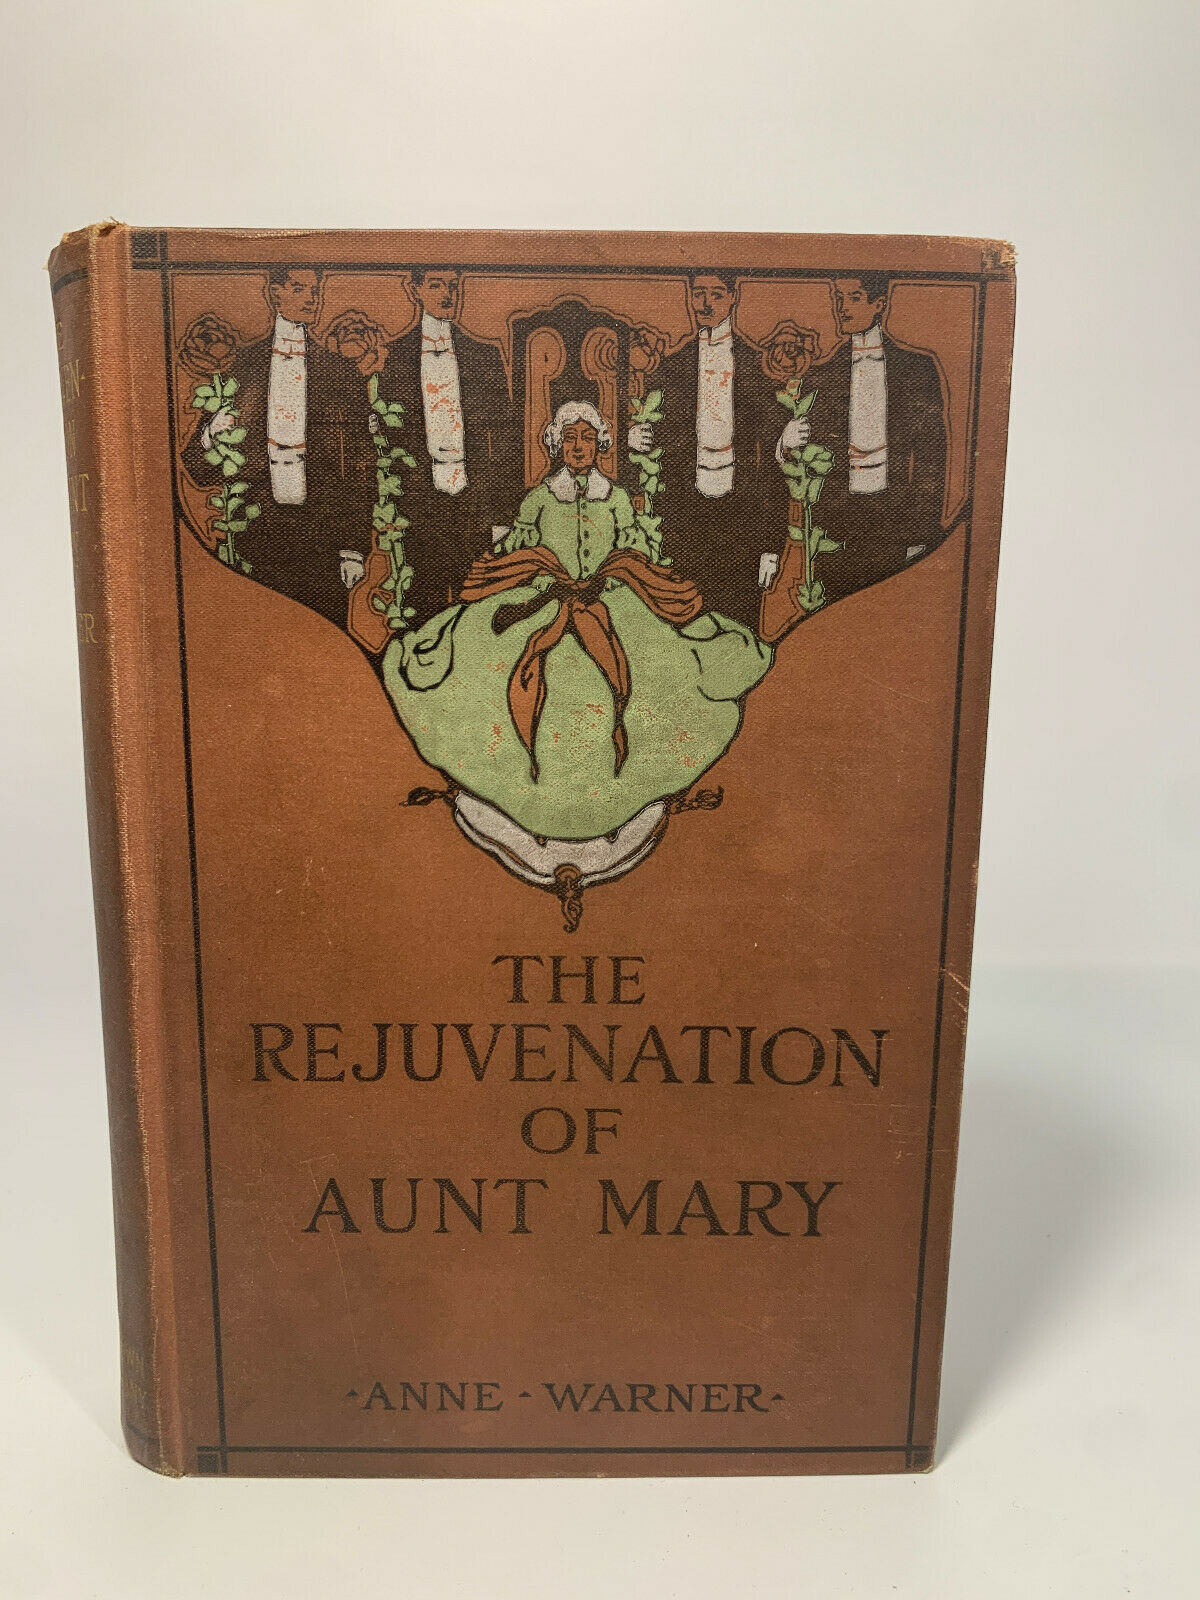 The Rejuvenation Of Aunt Marie by Anne Warner [1905]